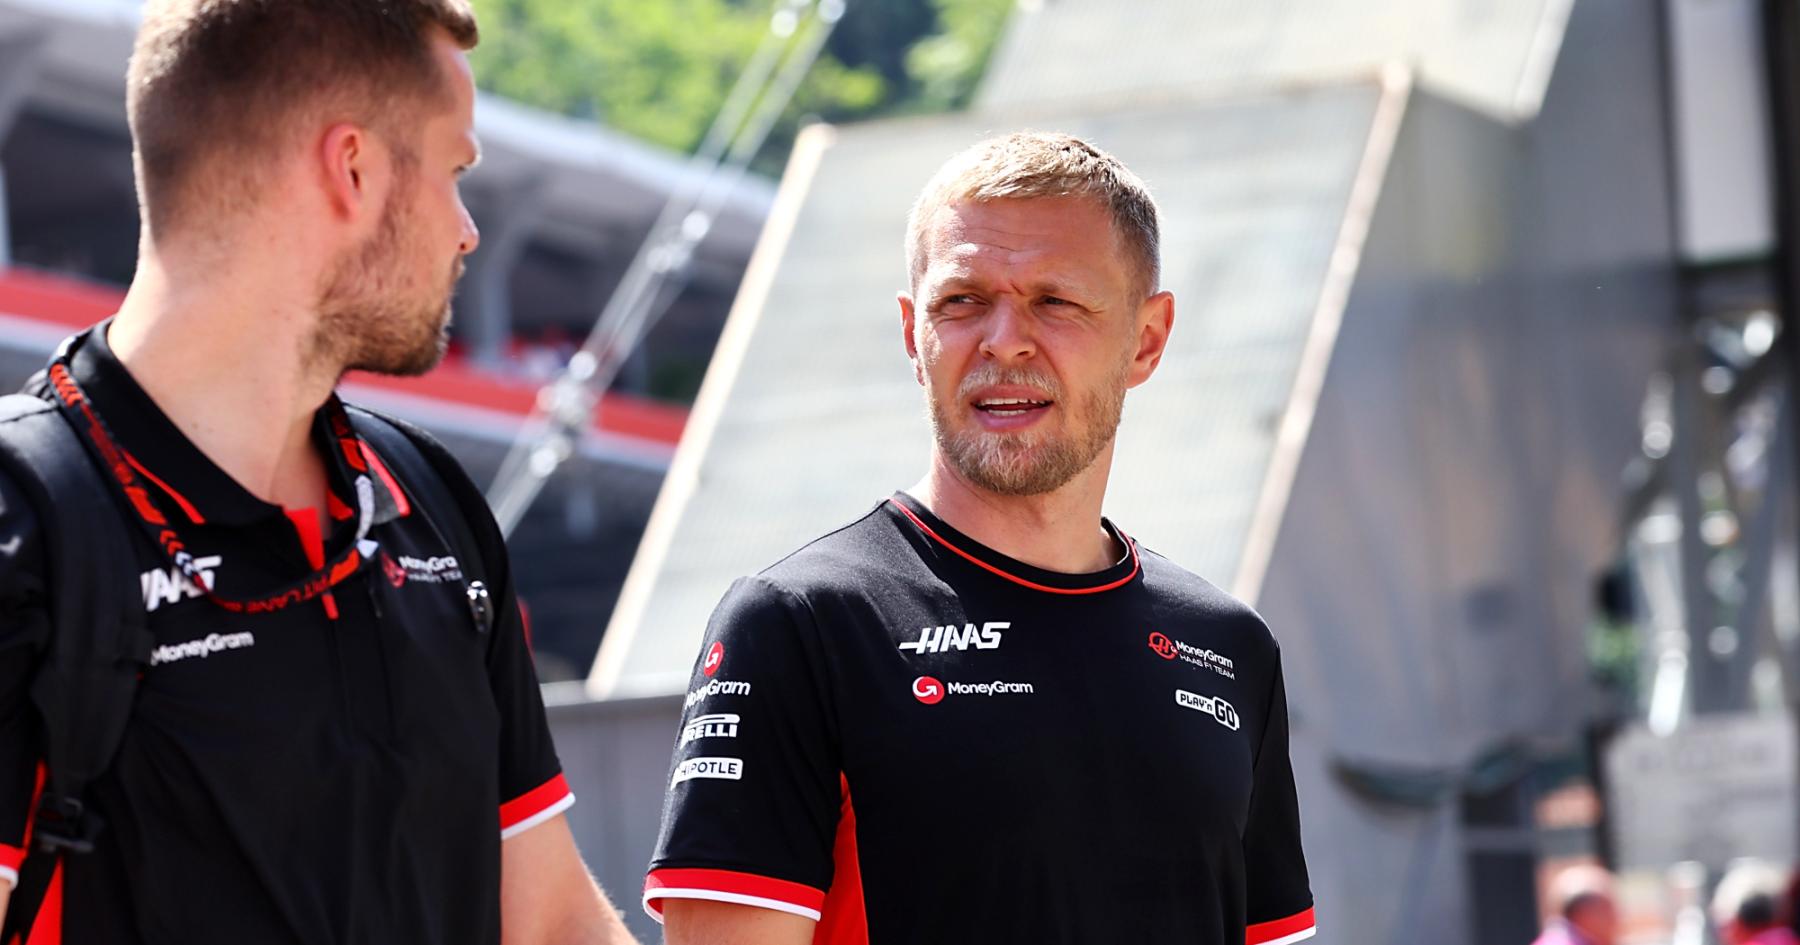 Turmoil in Monaco: Magnussen's Fate Revealed After Spectacular Crash